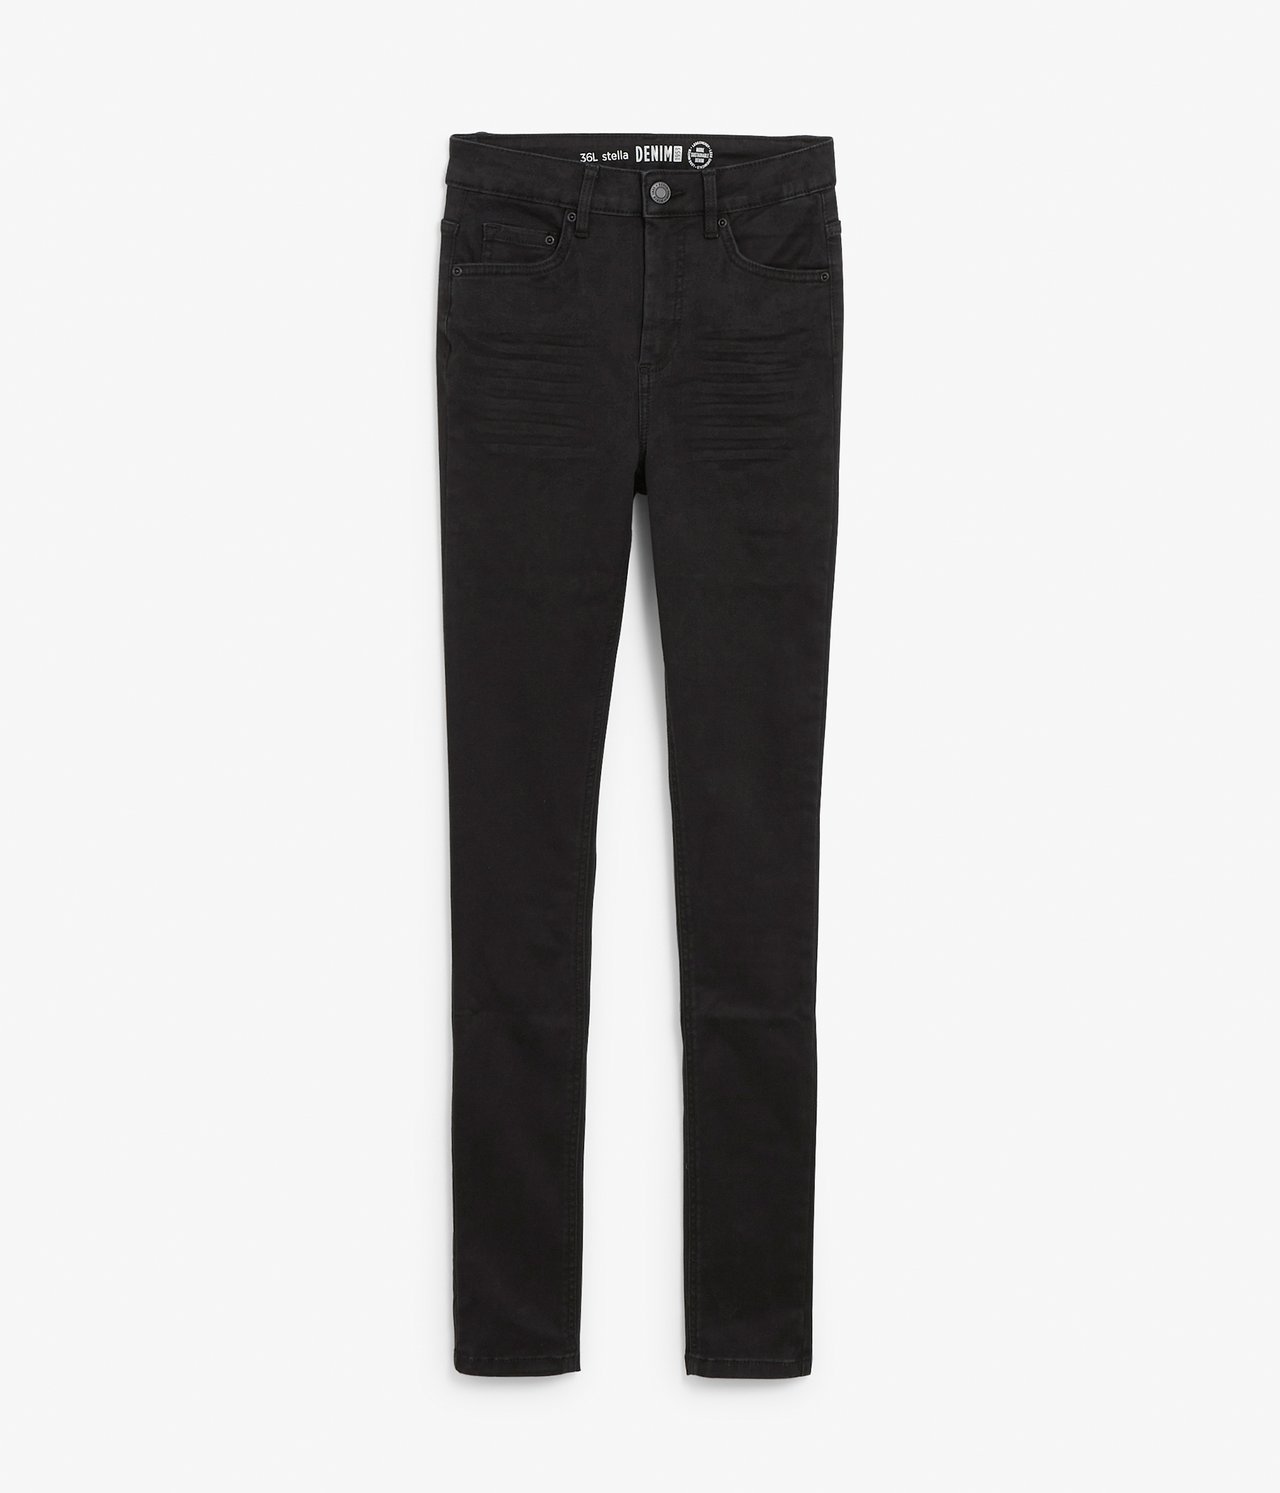 Super slim jeans extra long leg Svart - null - 4